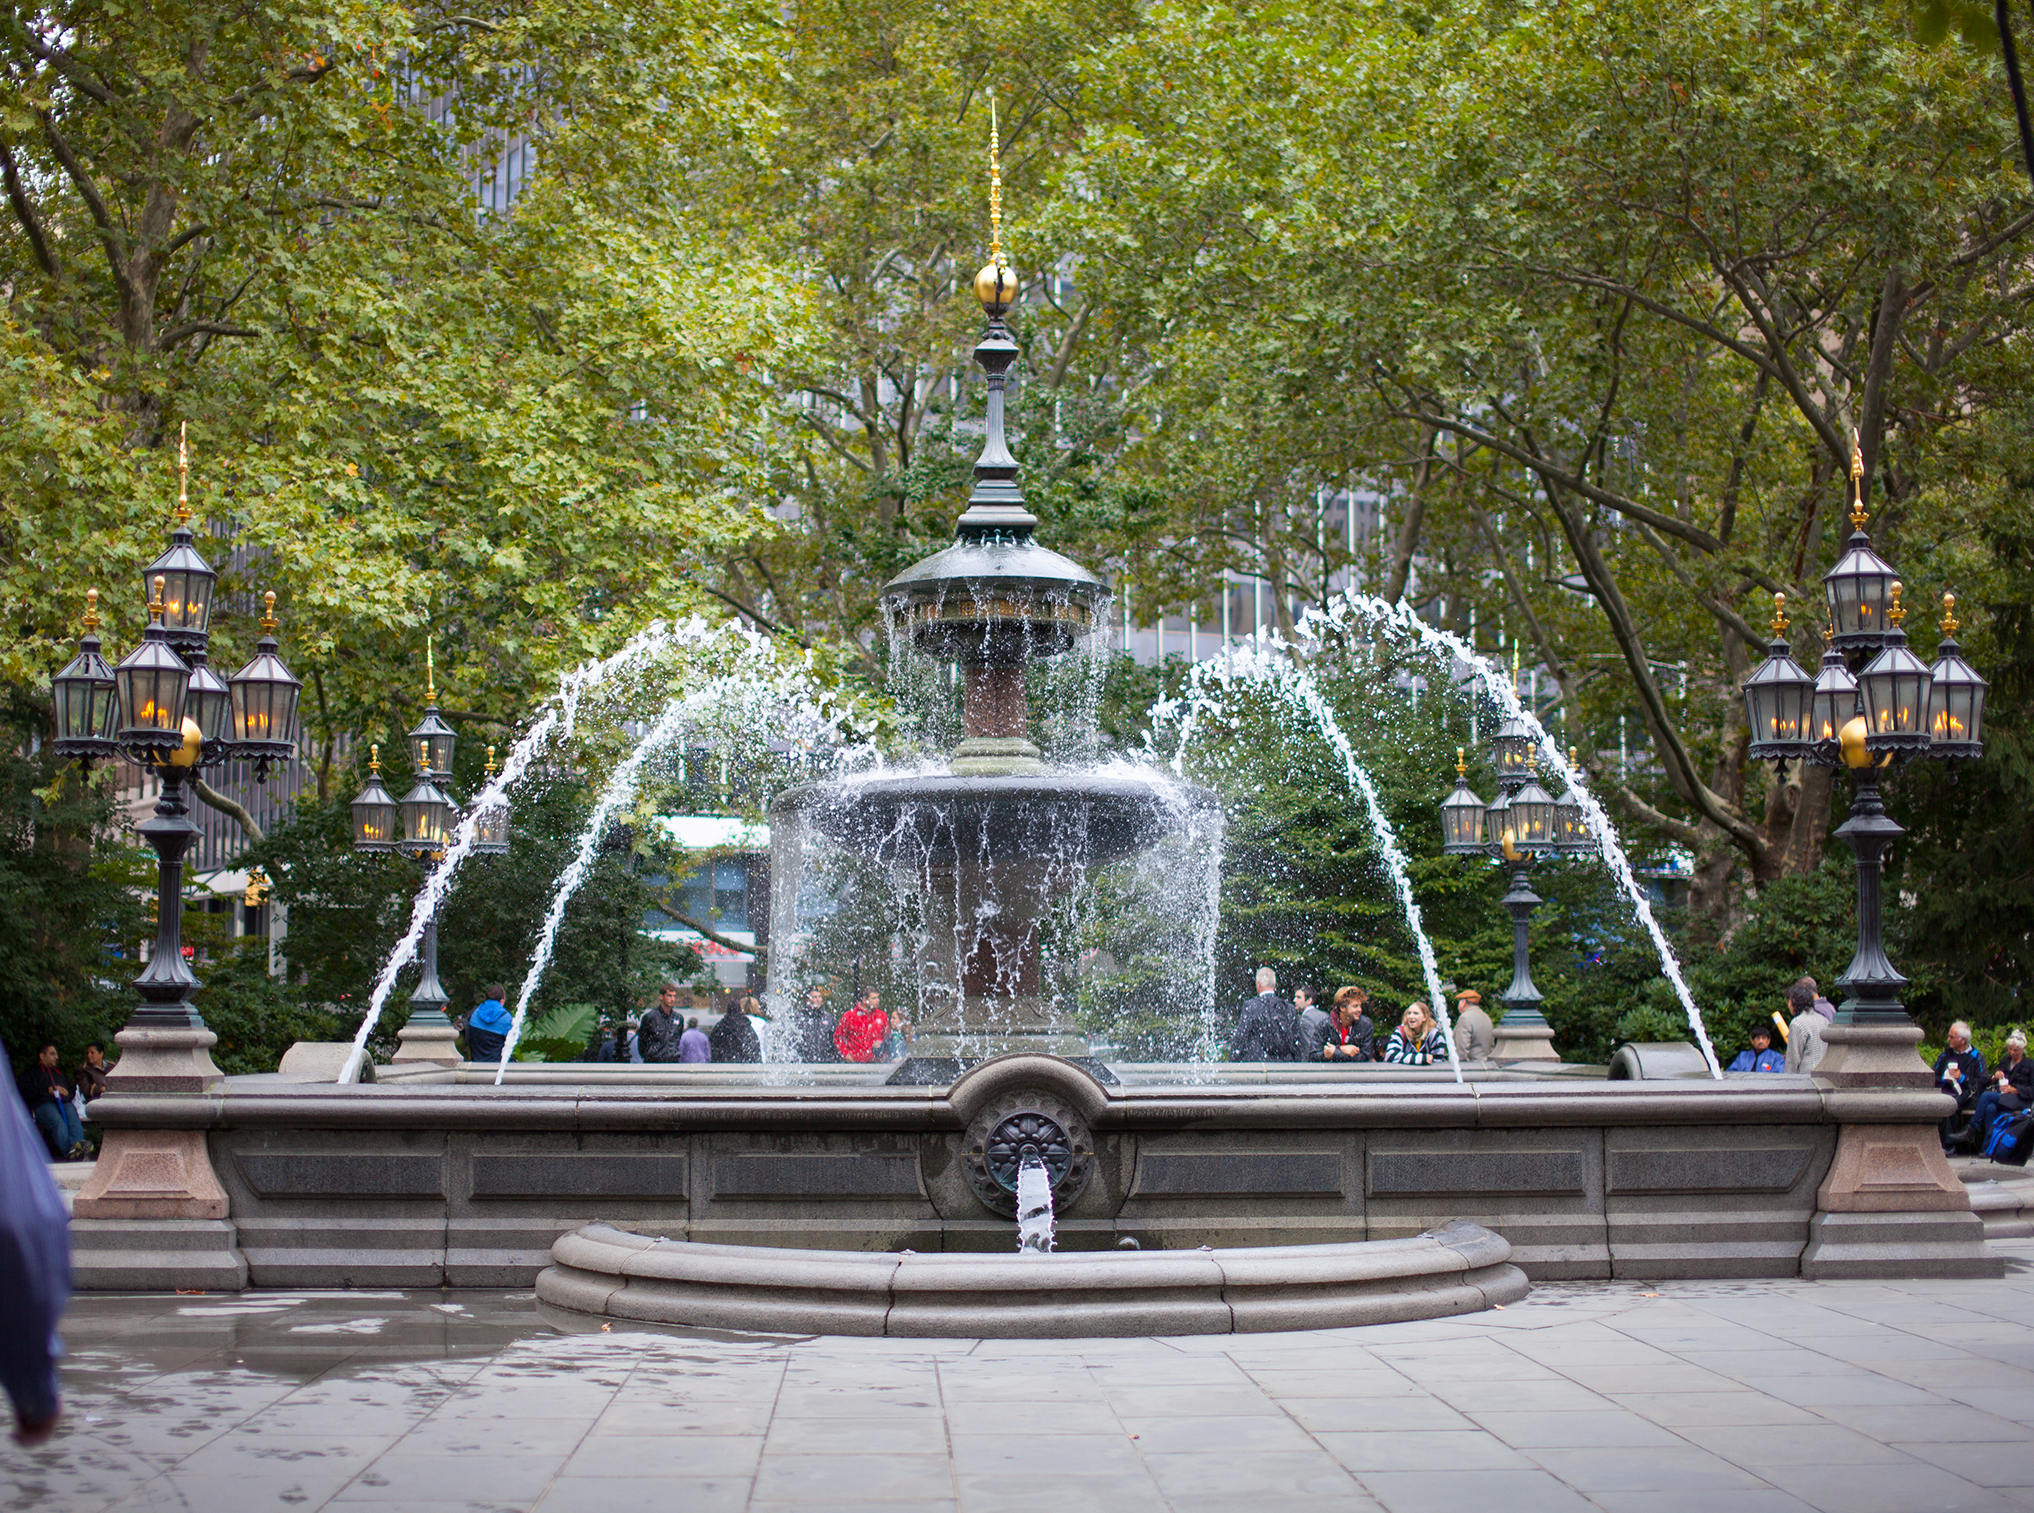 File:City Hall Park Fountain New York City.jpg - Wikimedia Commons